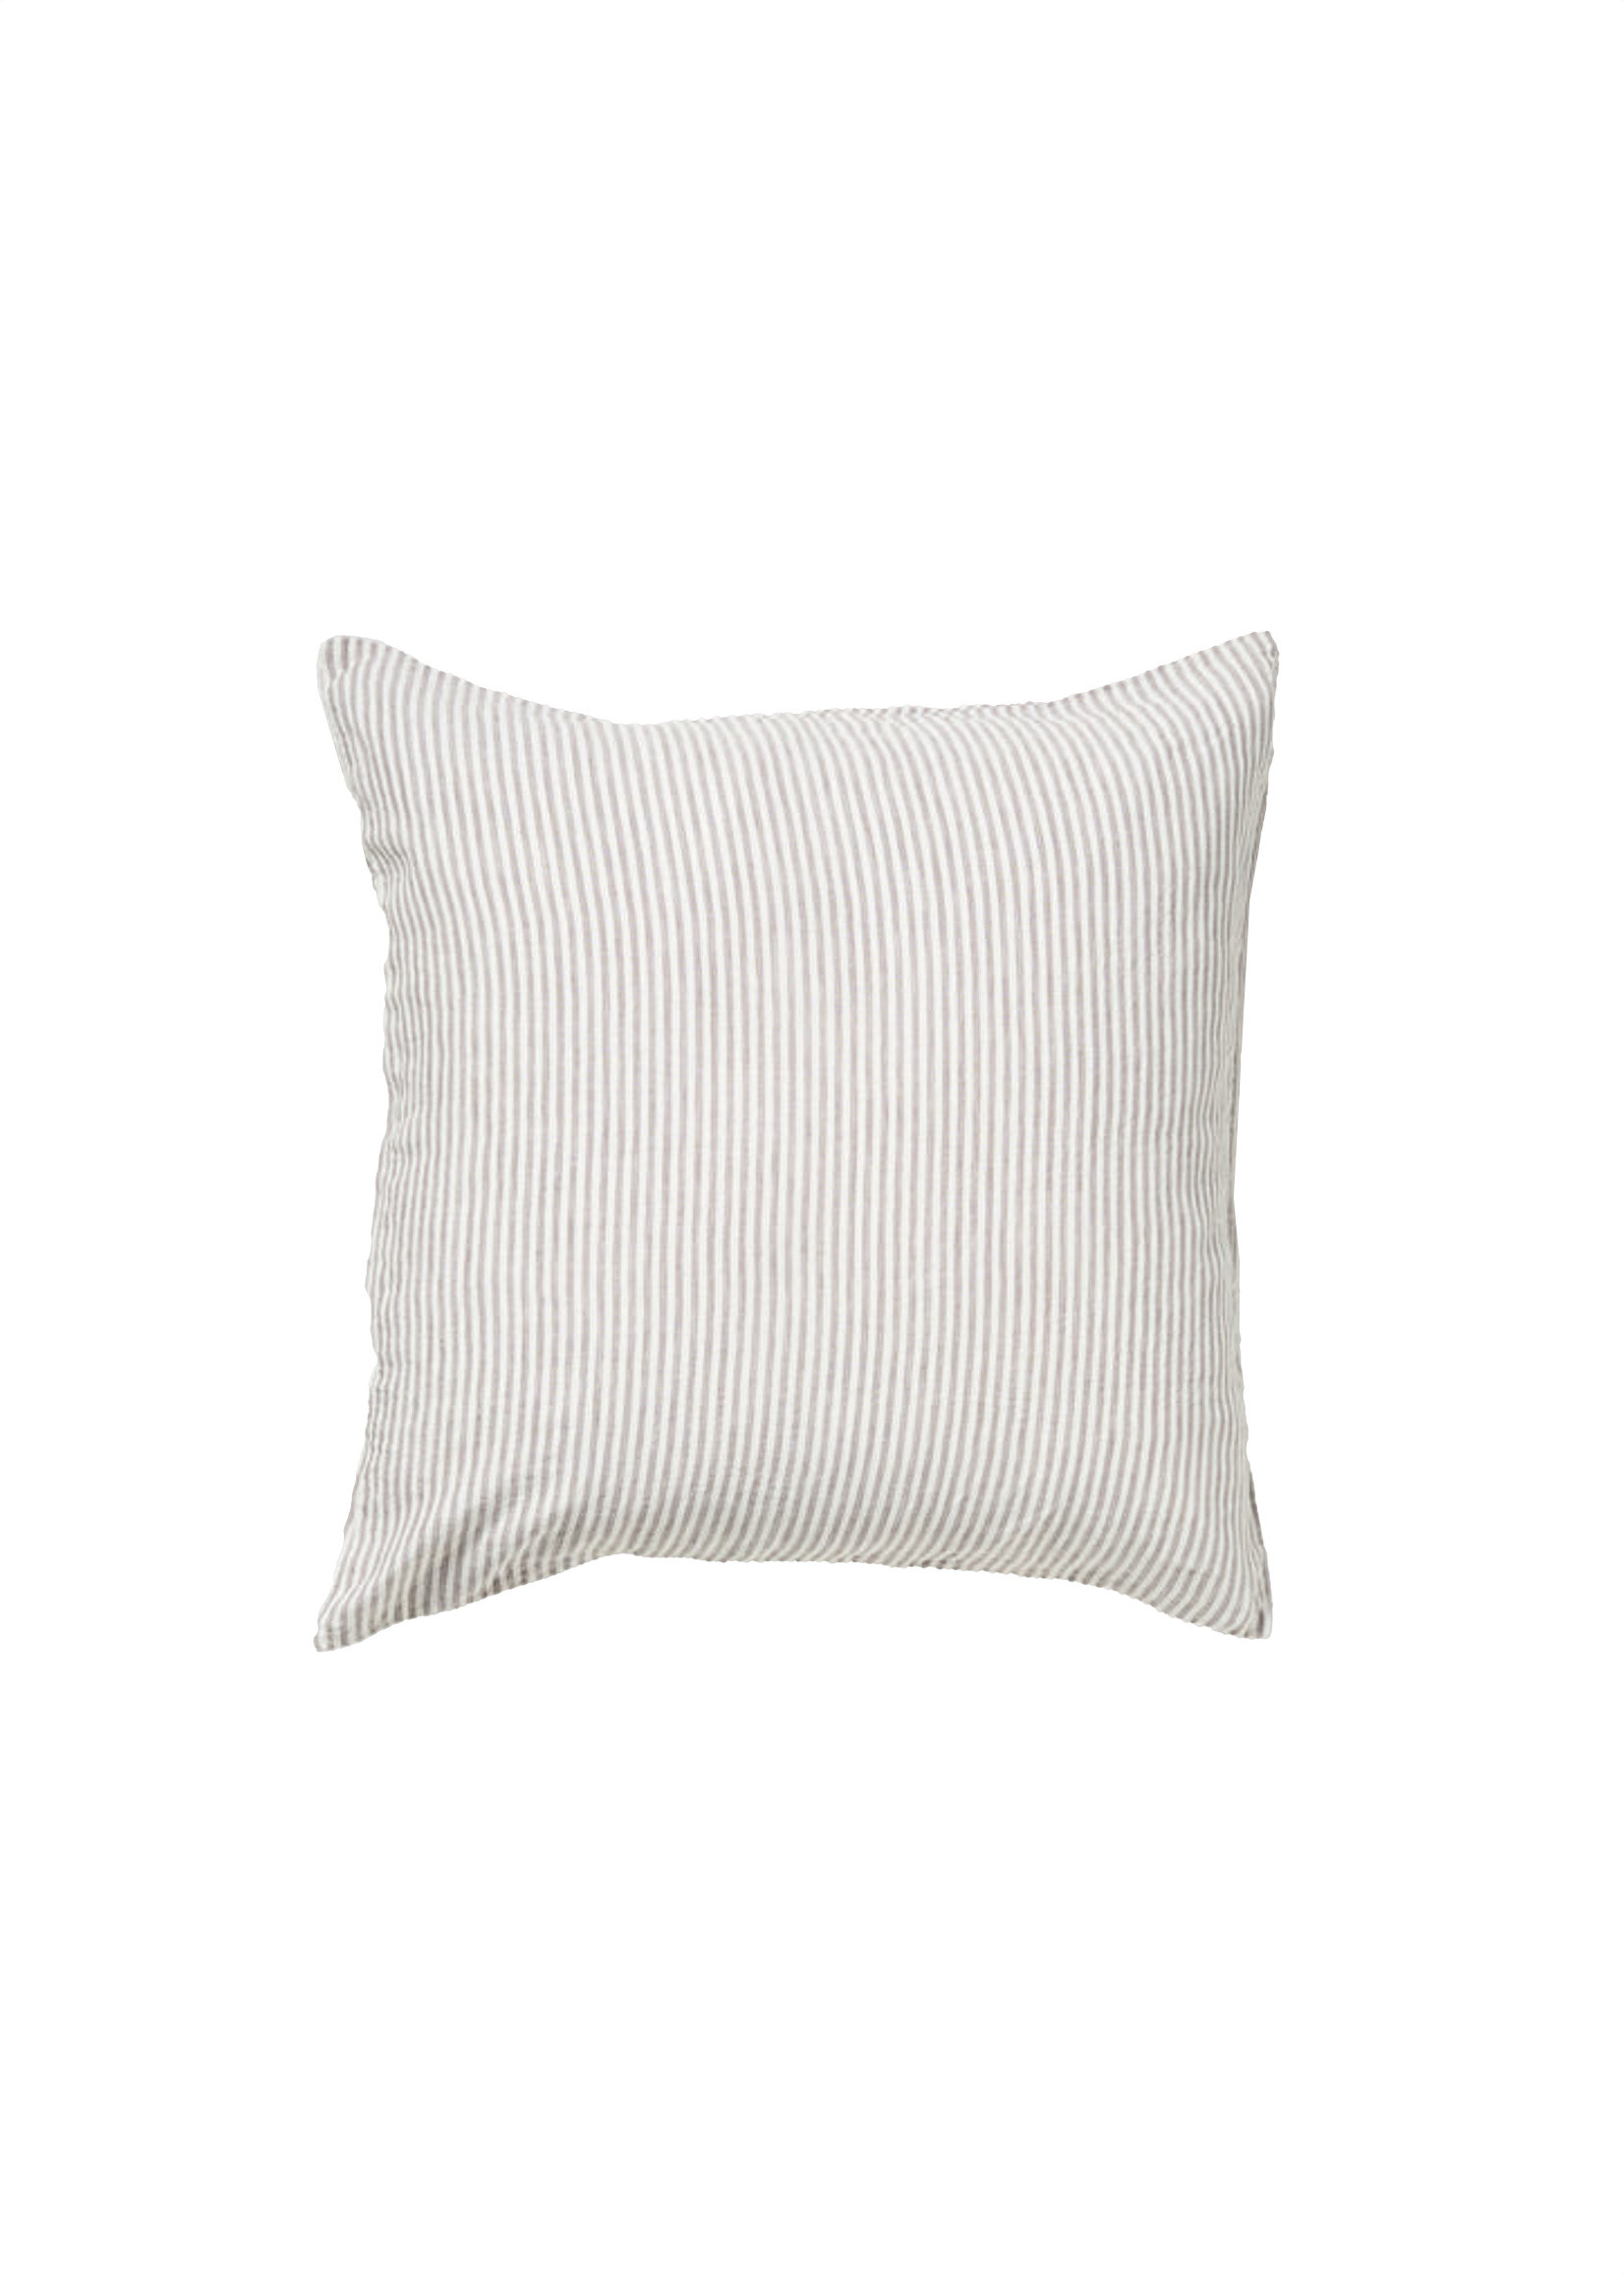 Linen Pillowslip in Grey & White Stripe